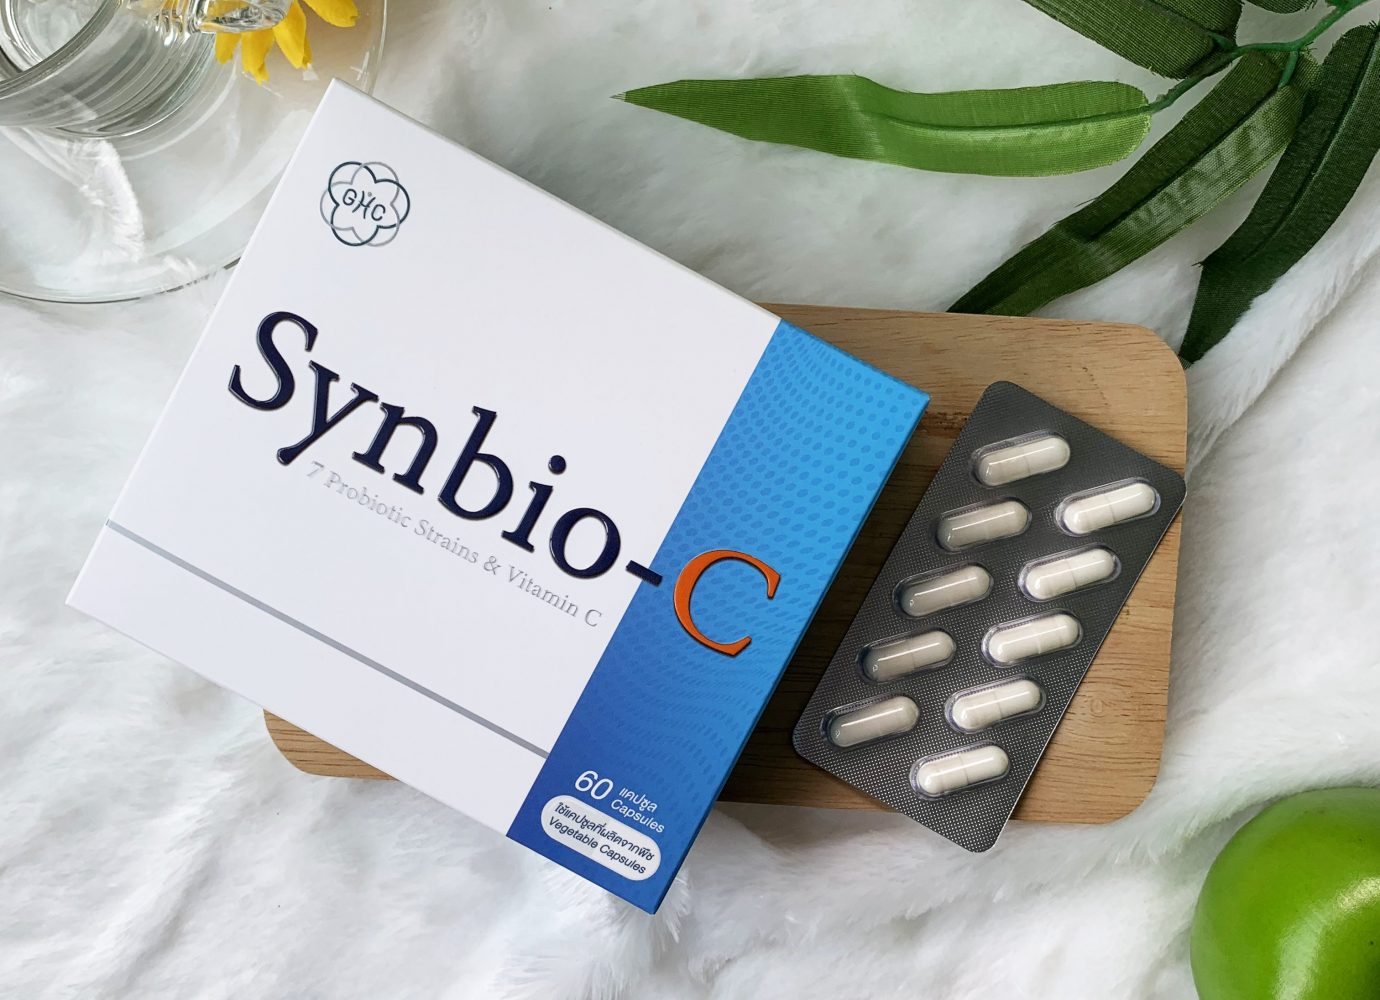 SYNBIO-C Box on the carpet